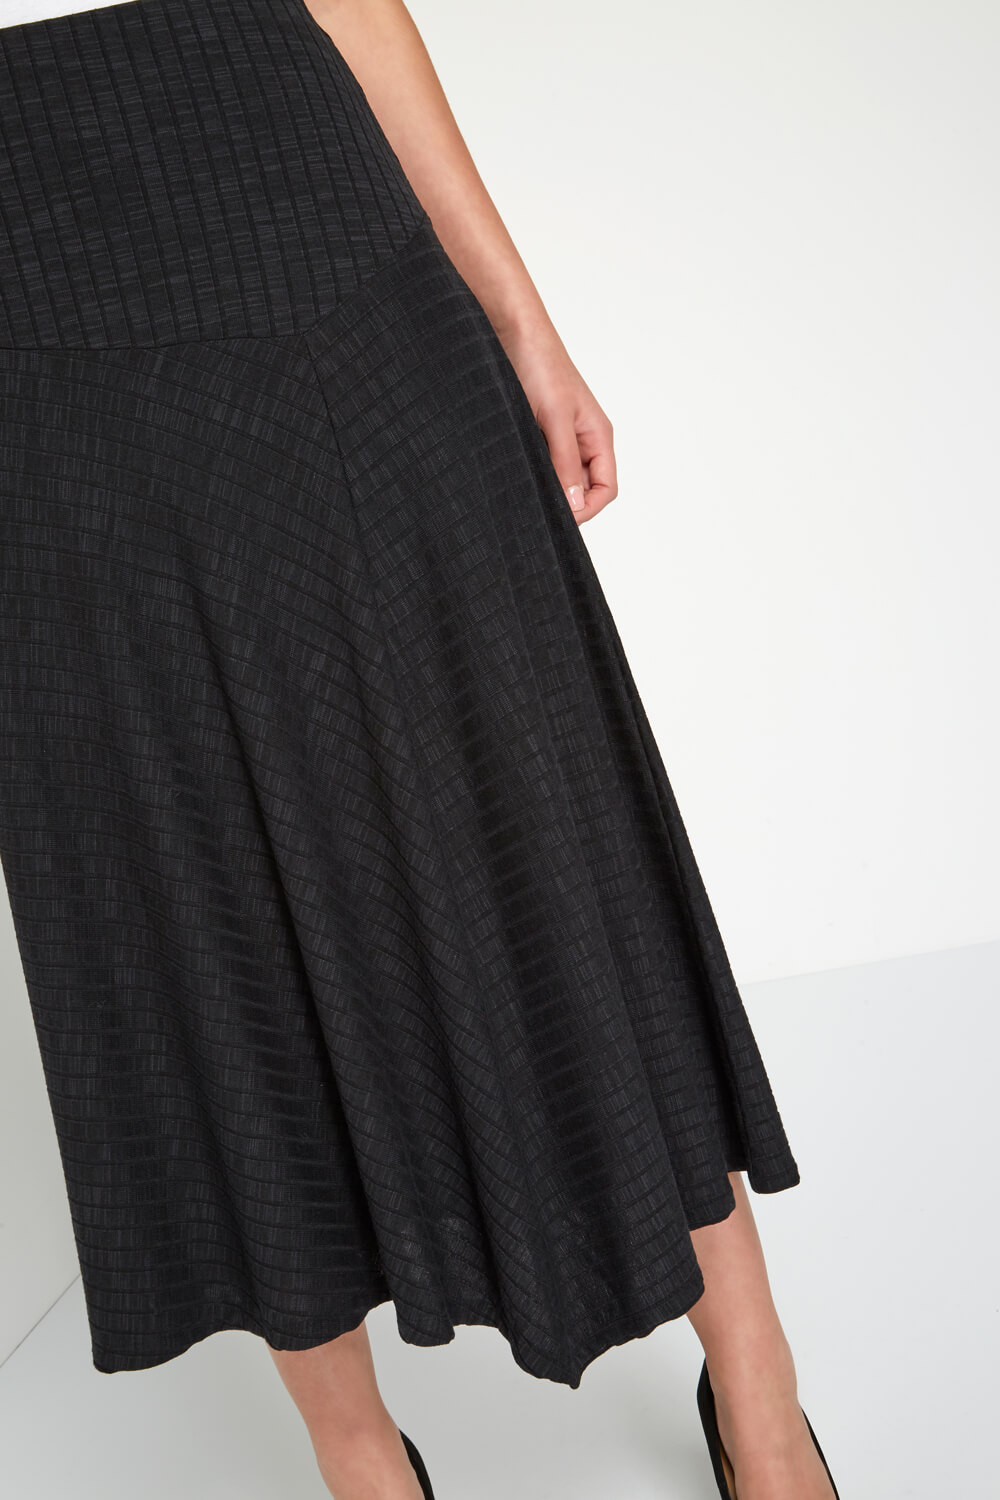 Asymmetric Midi Skirt in Charcoal - Roman Originals UK